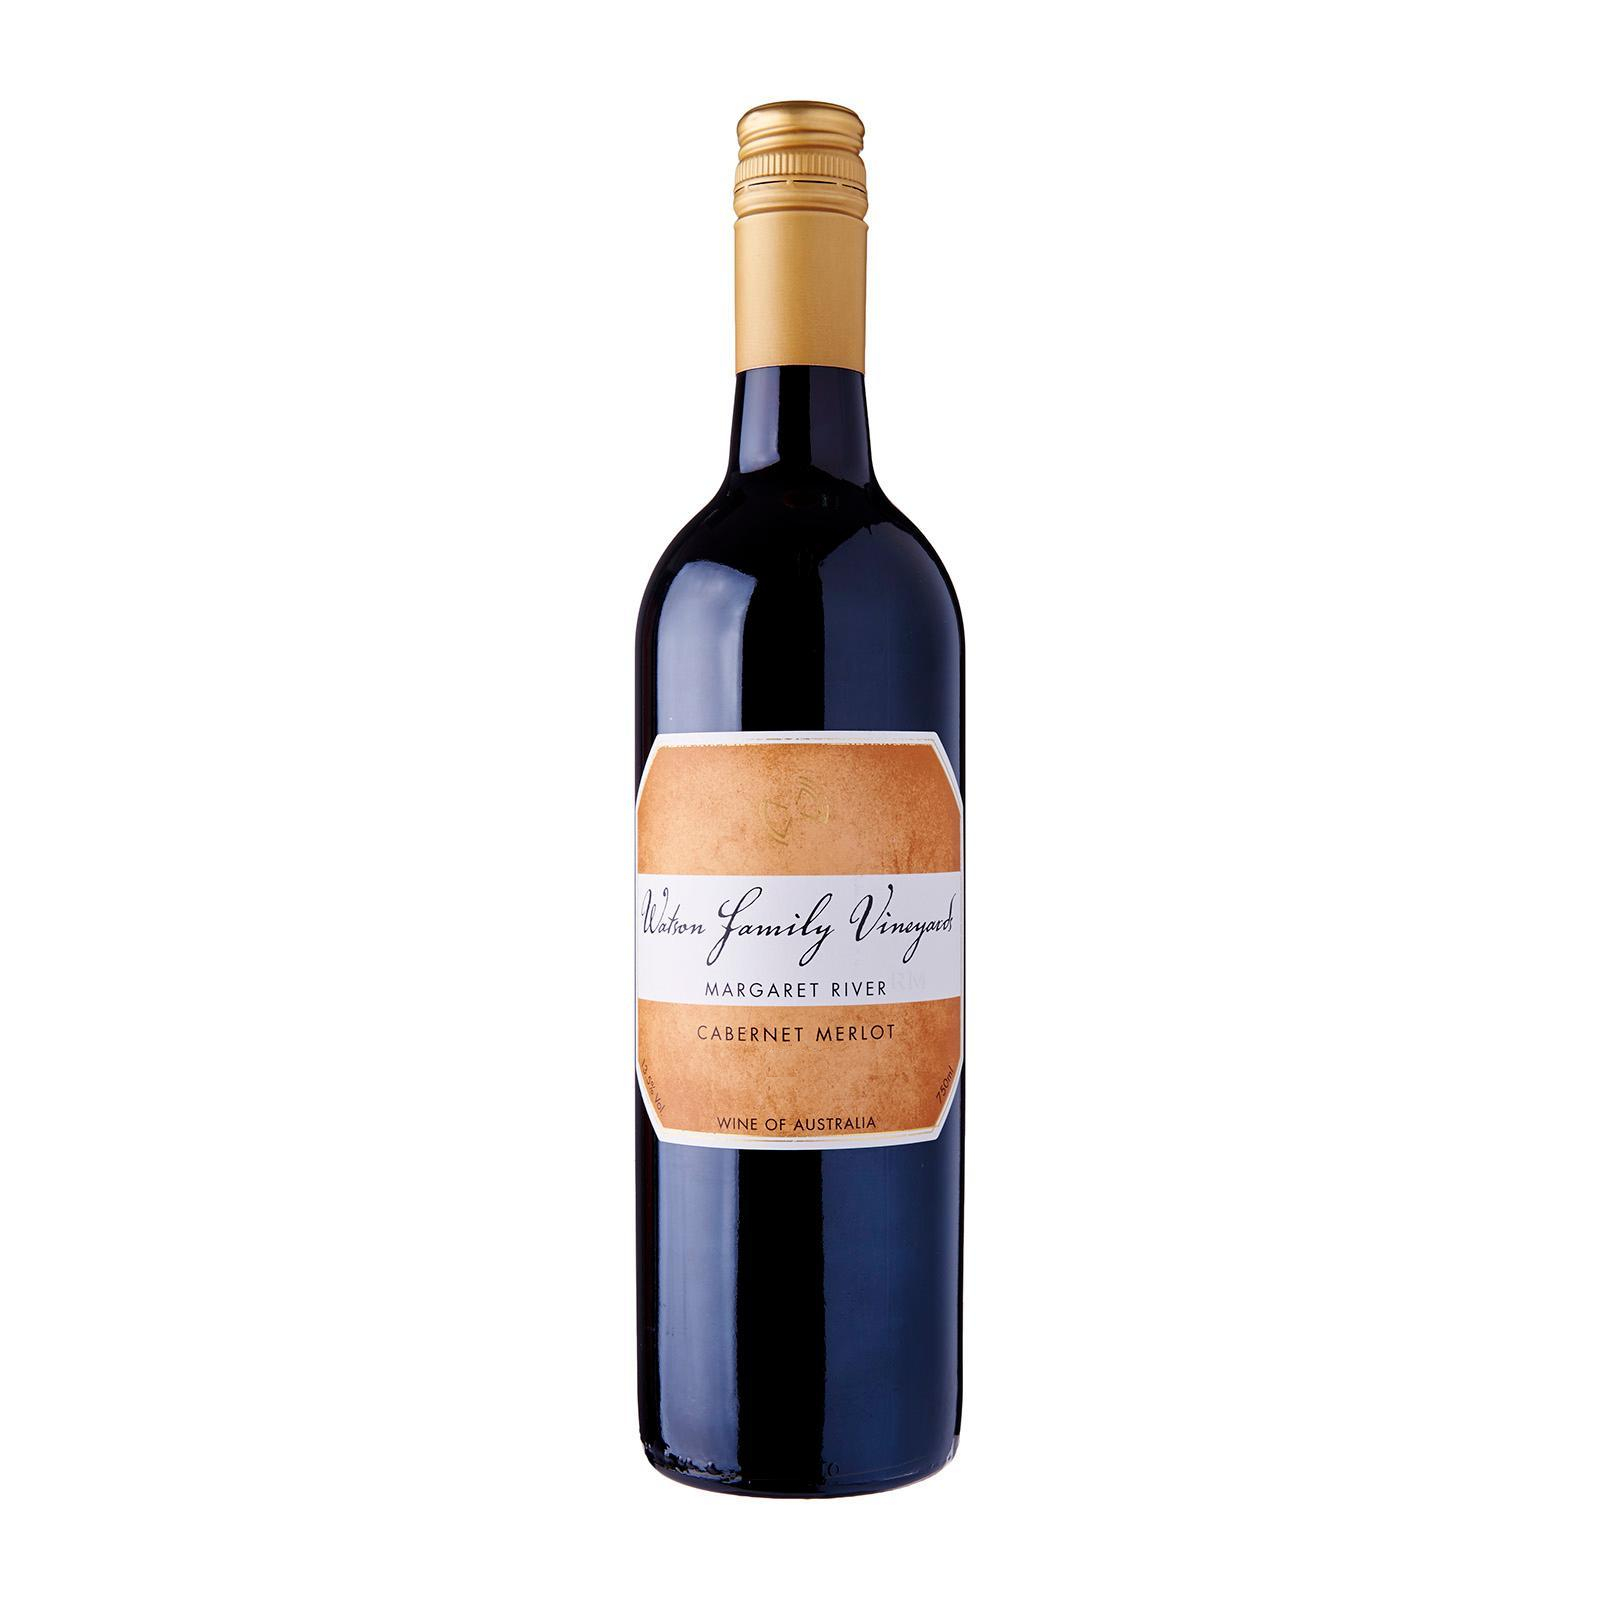 Watson Family Vineyards Cabernet Sauvignon Merlot 2016 Red Wine – Margaret River, Australia